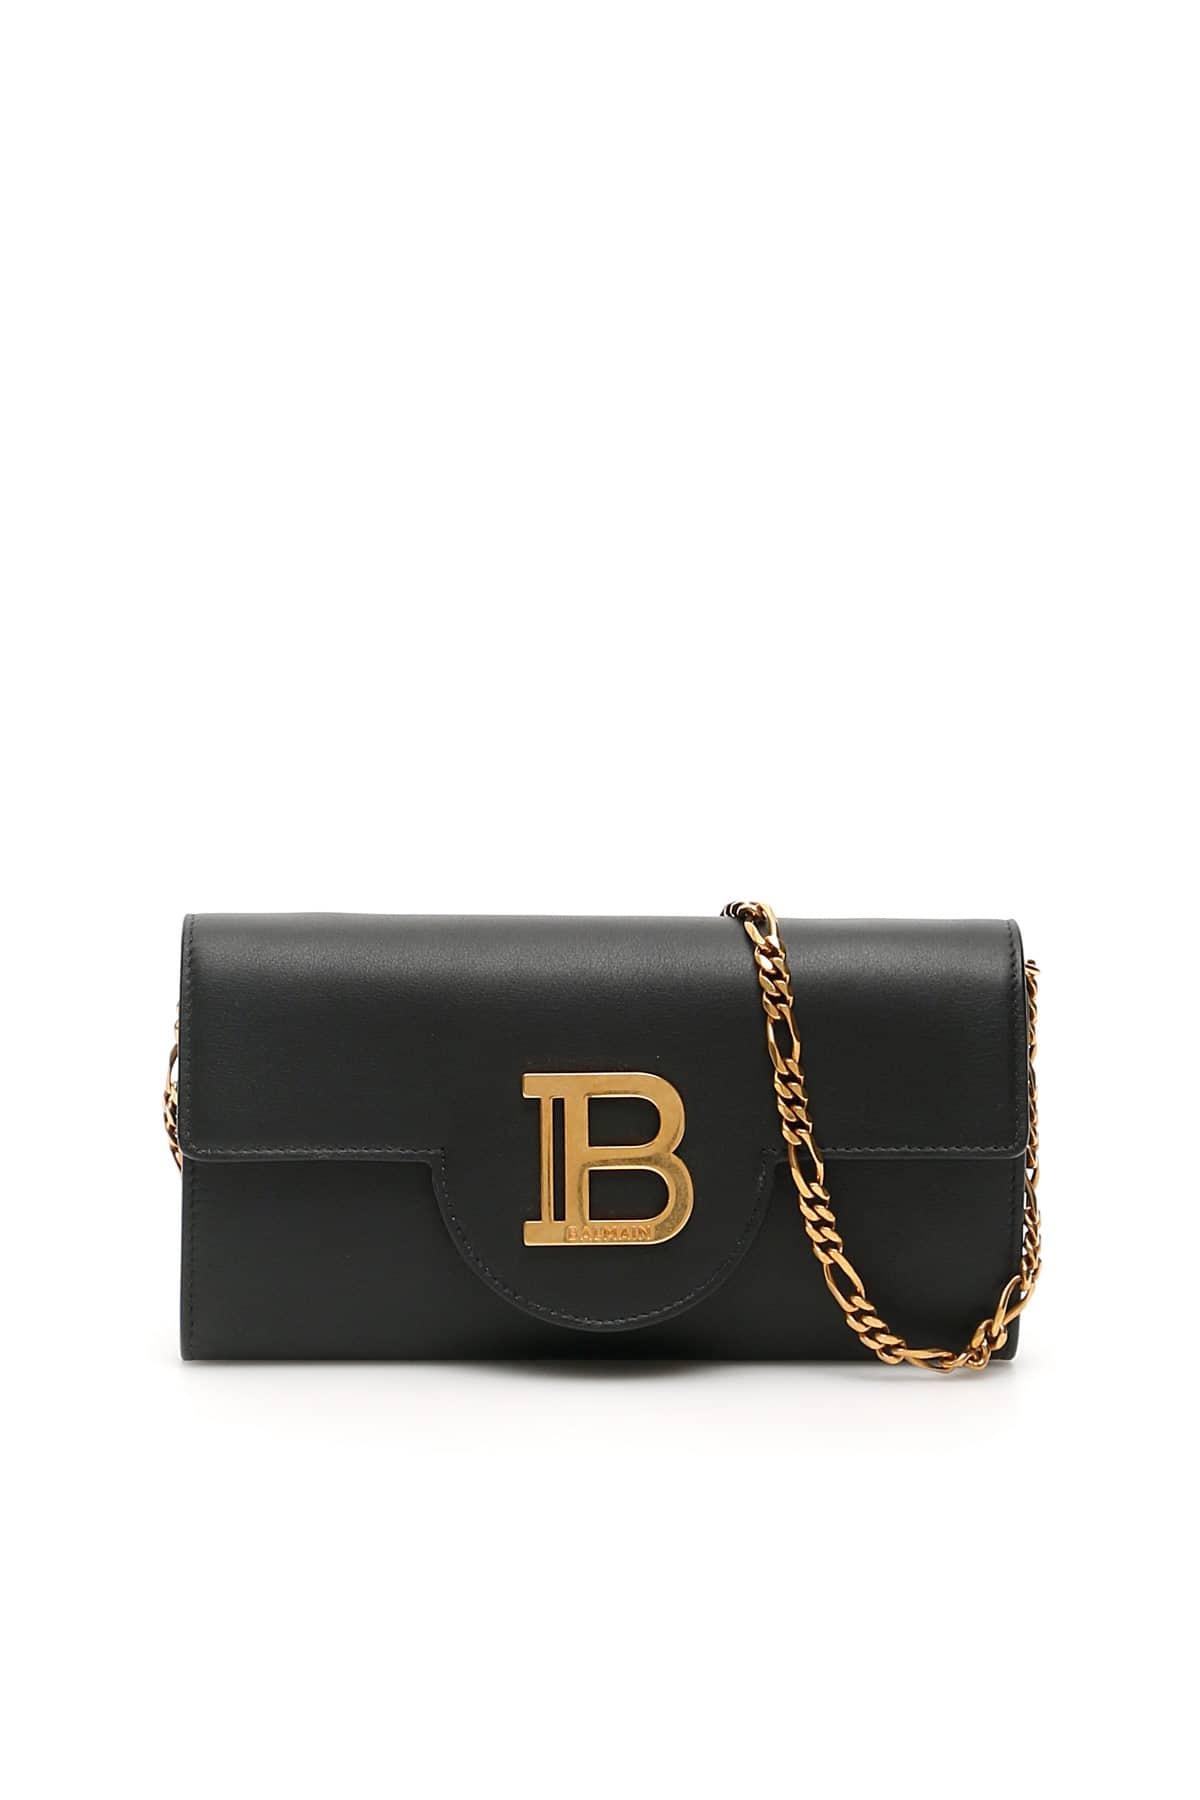 Balmain Leather B-wallet On Chain in Black - Lyst